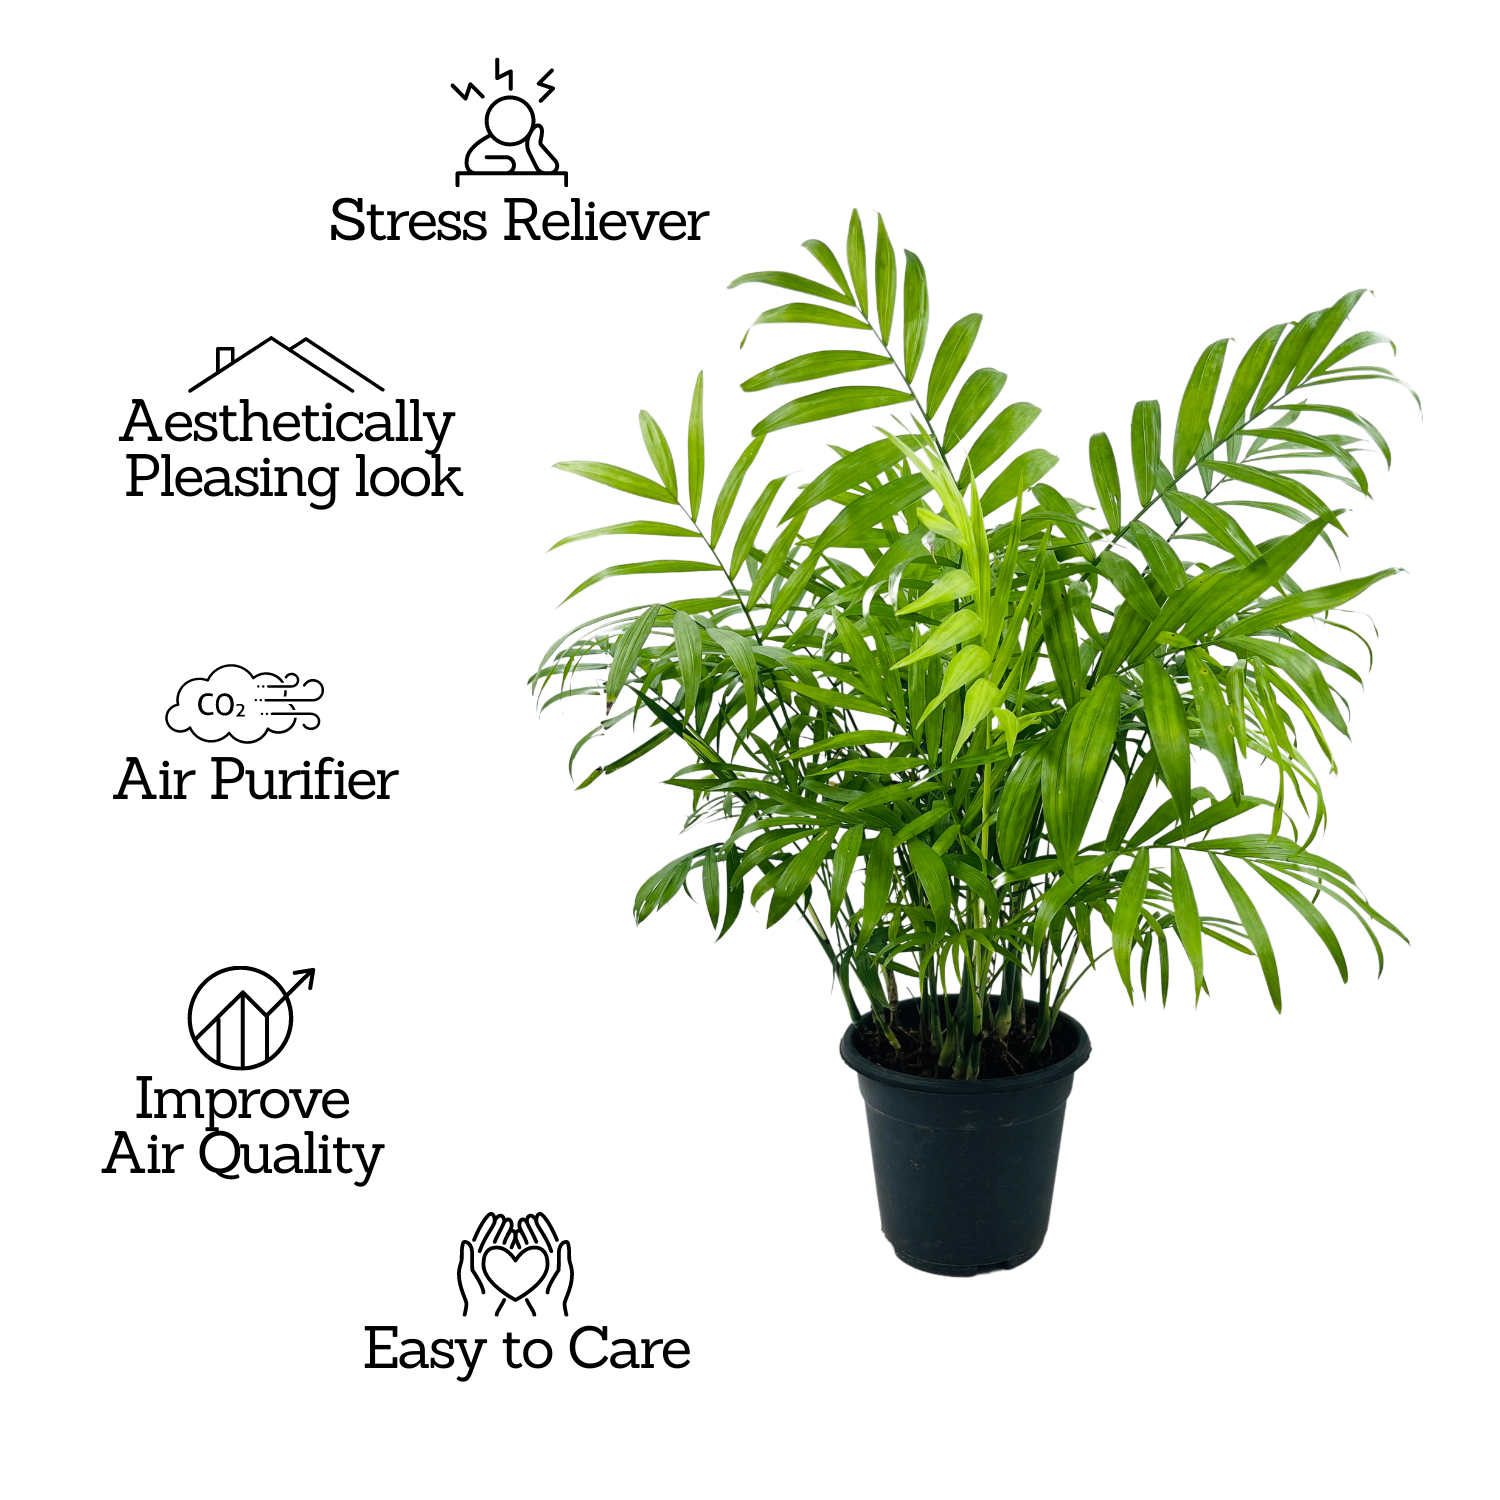 Chamaedorea Palm (Chamaedorea seifrizii) - Live Plant For Indoor (Home & Garden)